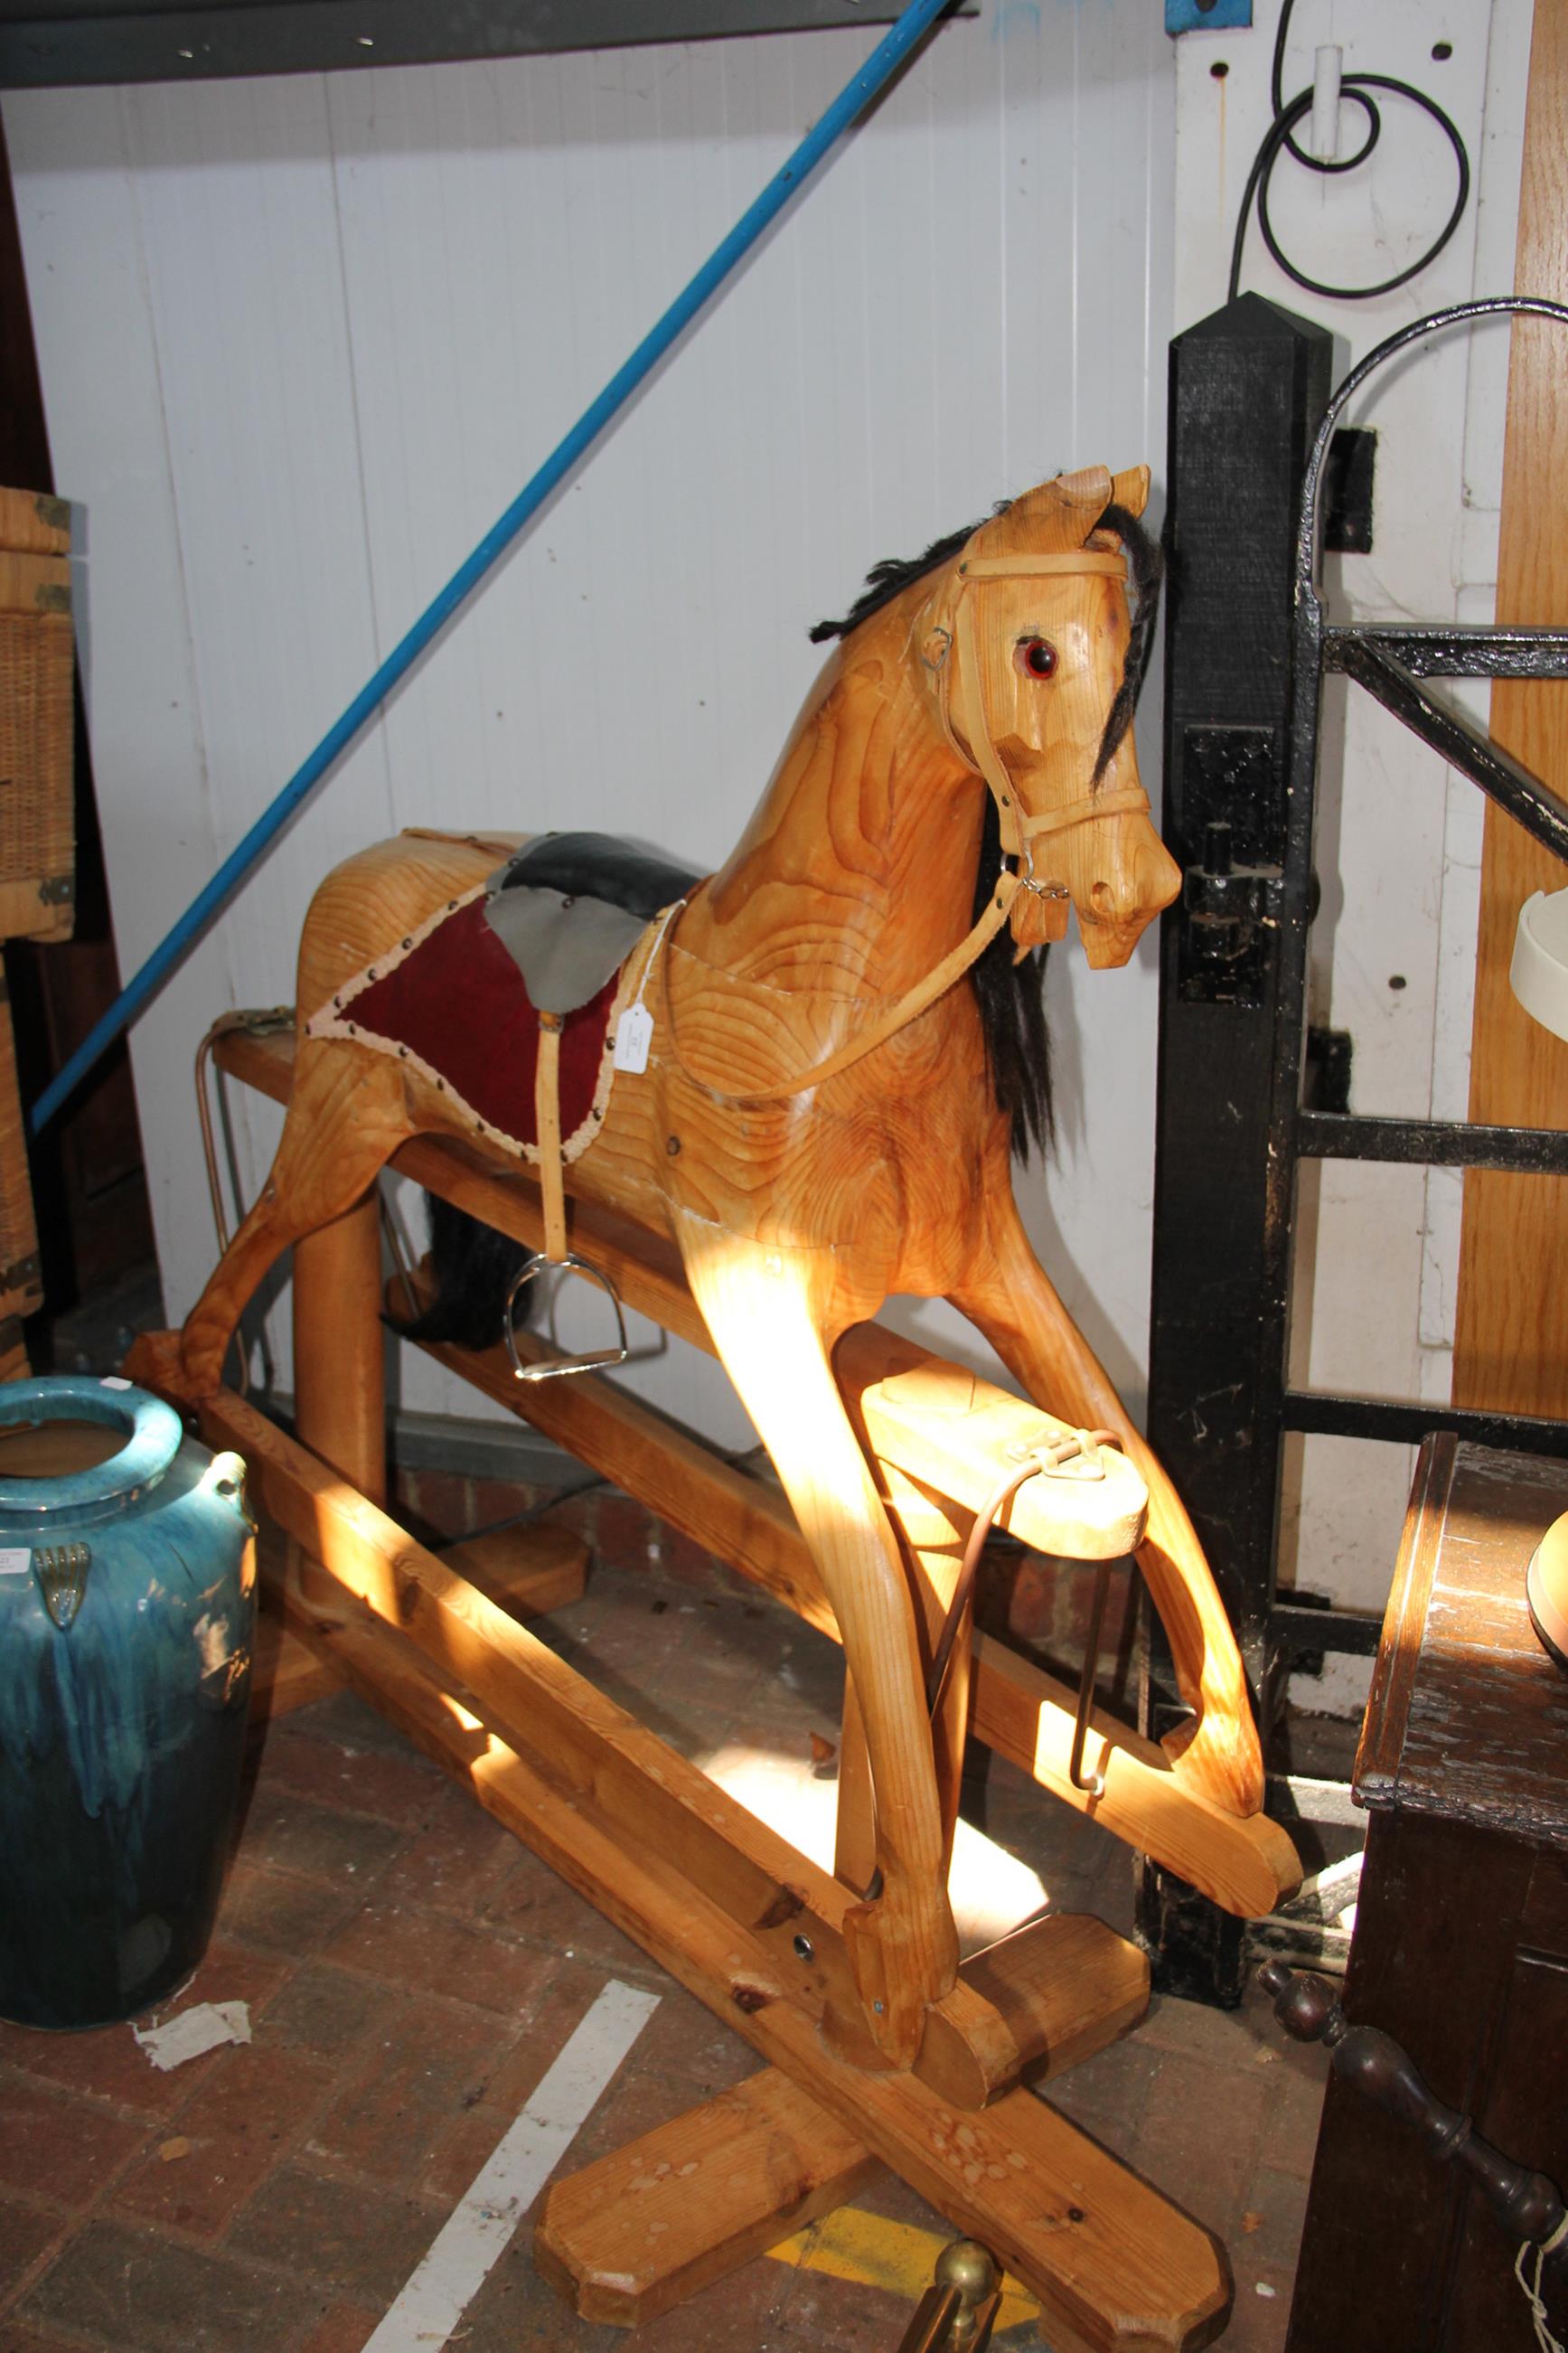 A 130cm high wooden rocking horse